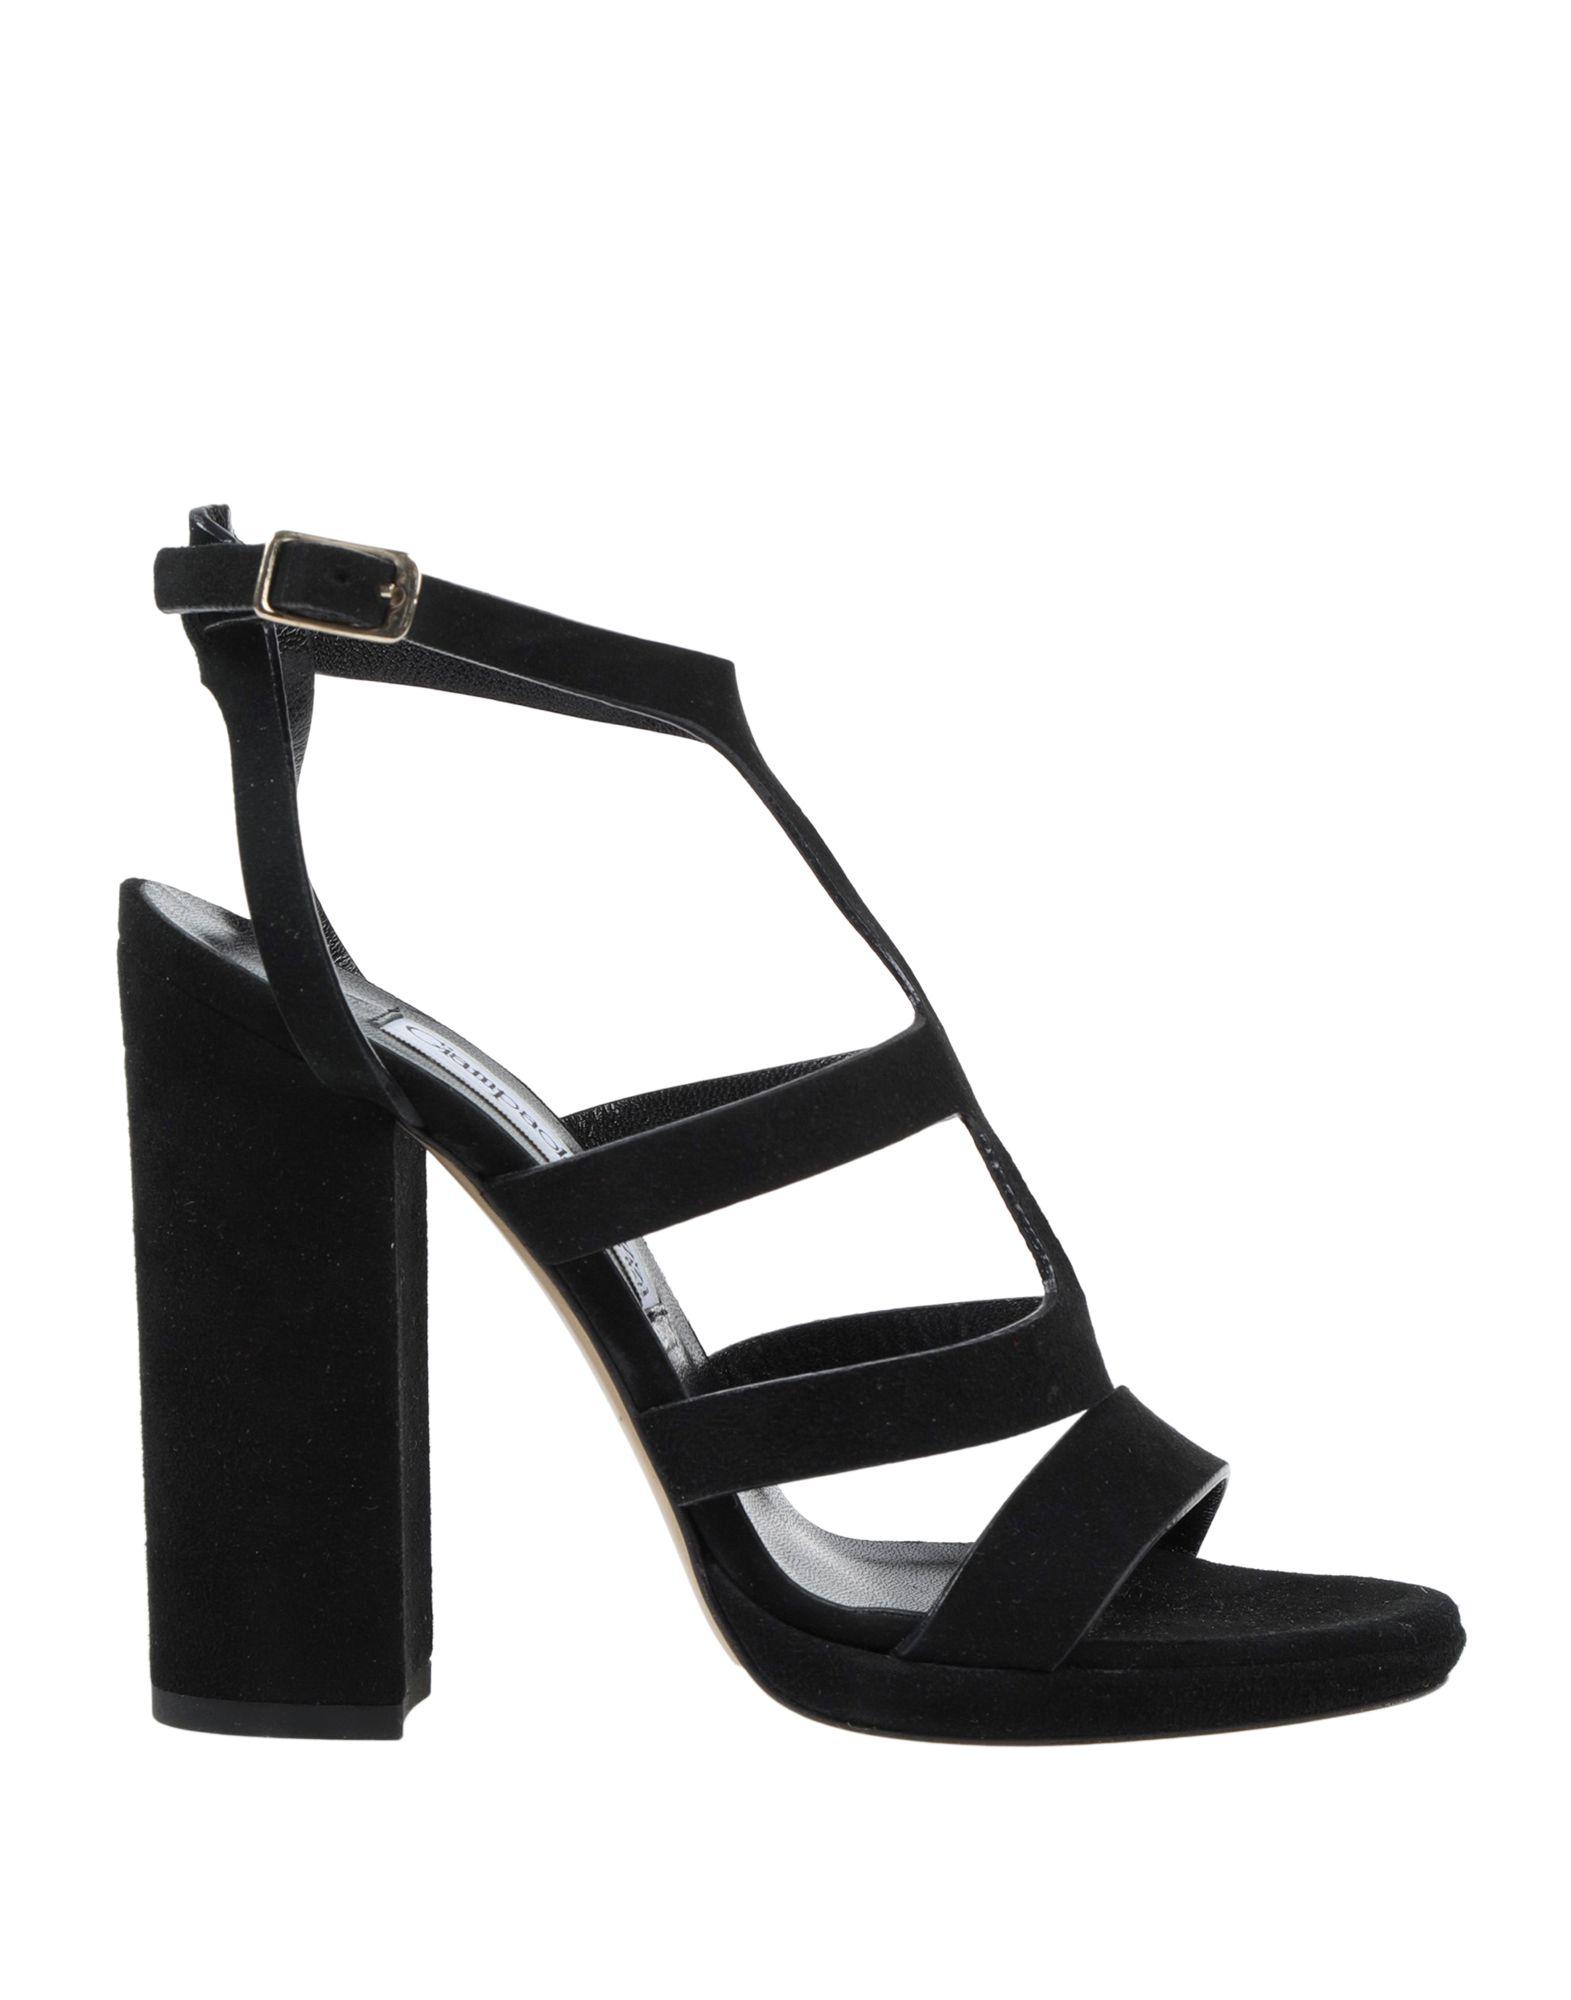 Giampaolo Viozzi Sandals in Black - Lyst